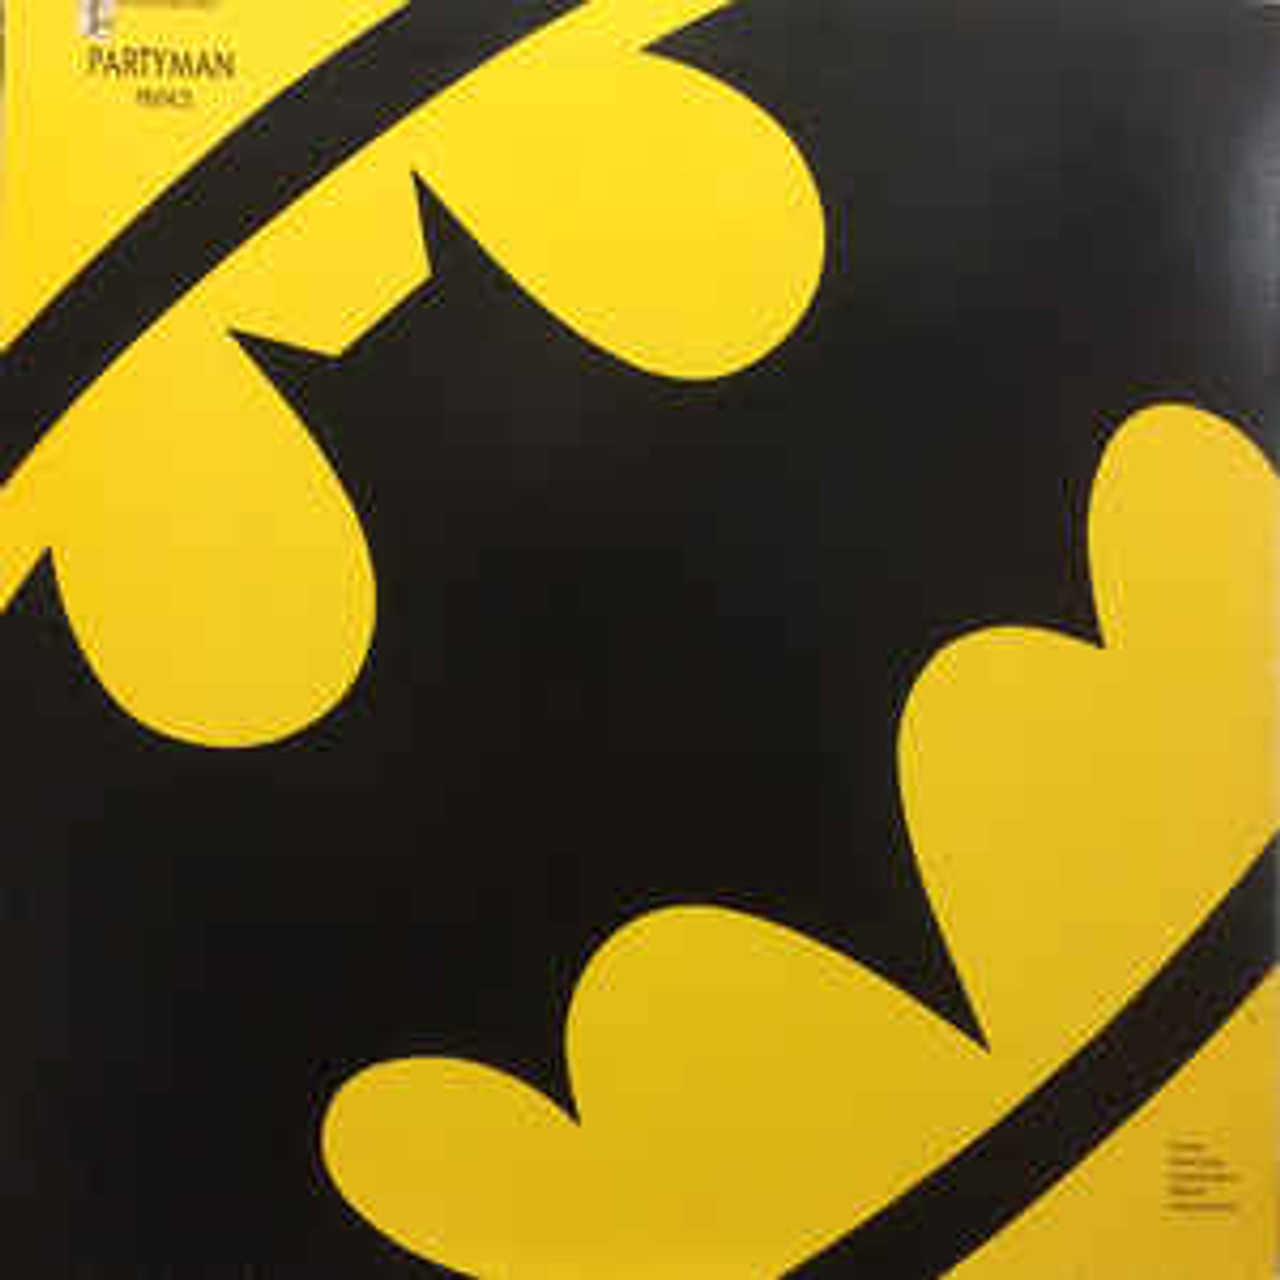 Prince - Partyman (Maxi-Single) - Vinyl We Got the Beats Record Store